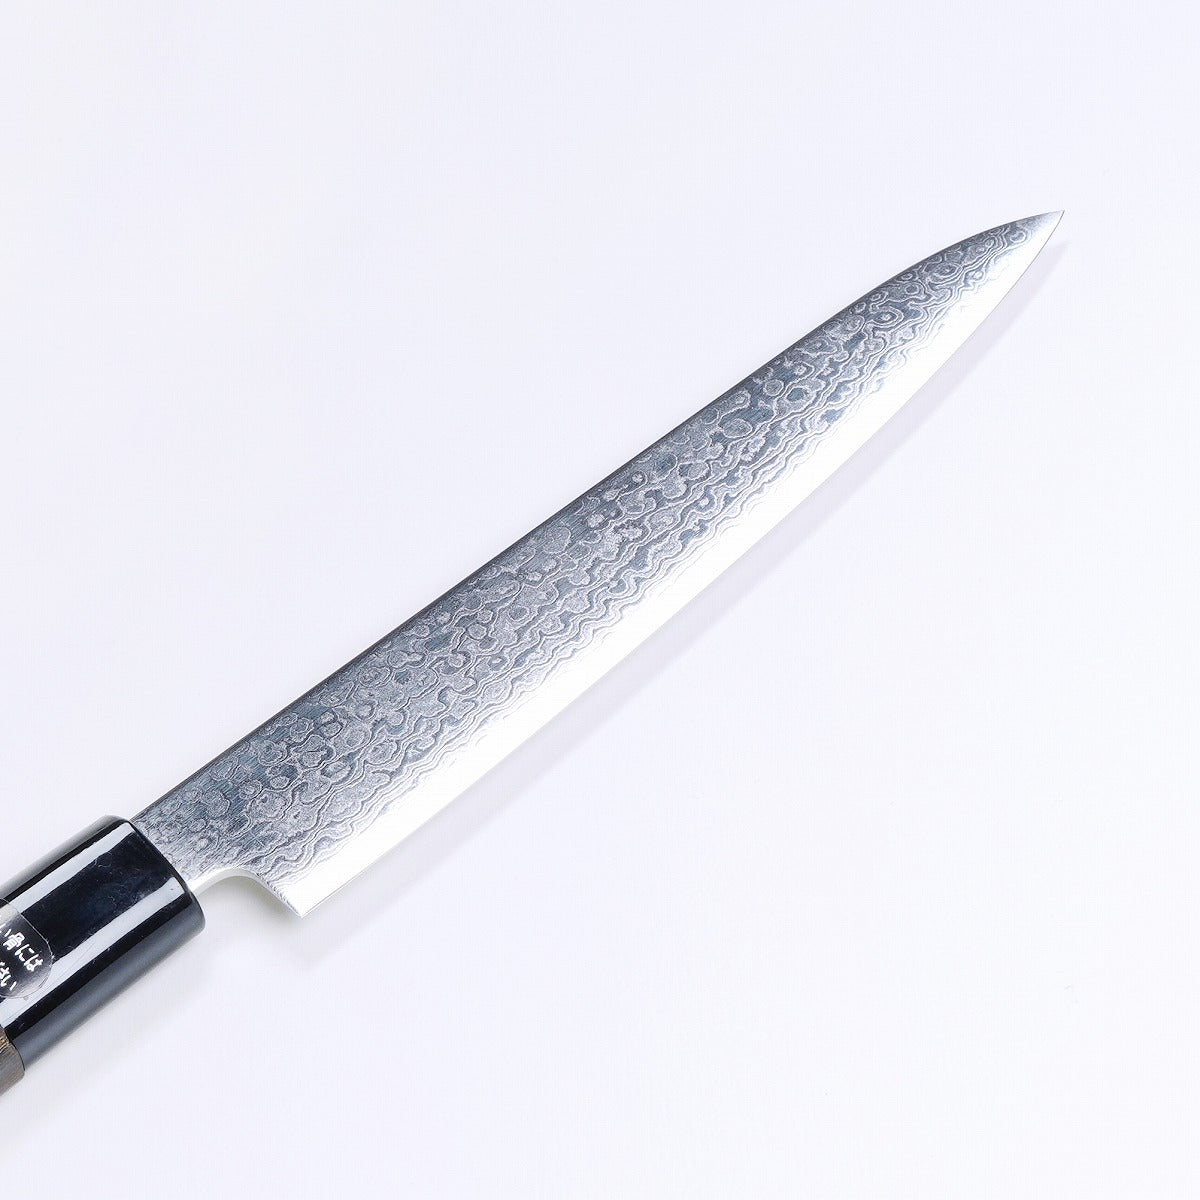 Petty (Utility Knife) ZA18 Laminated Stainless Steel Knife, Suminagashi Pattern, 150 mm